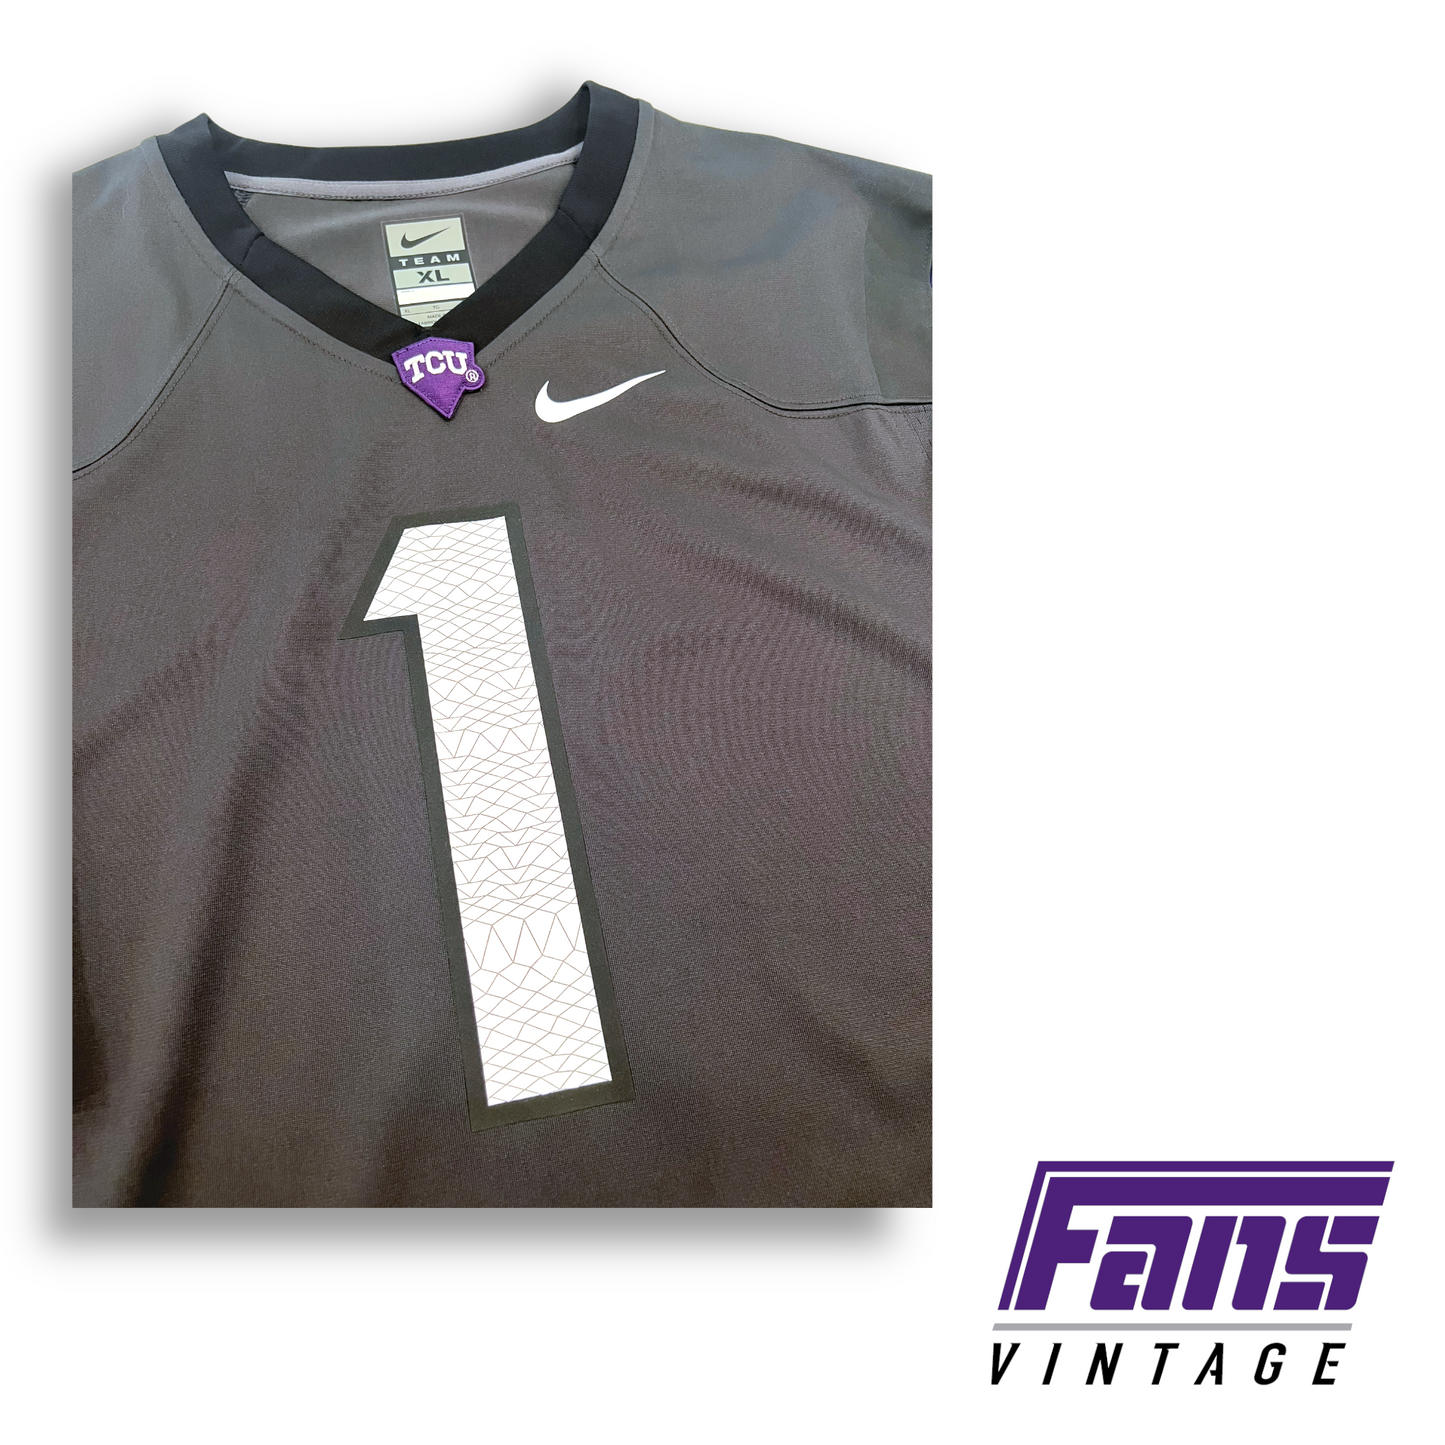 Awesome 2014 Alternate Jersey - TCU Football graphite grey / purple #1 Frogskin Numbers